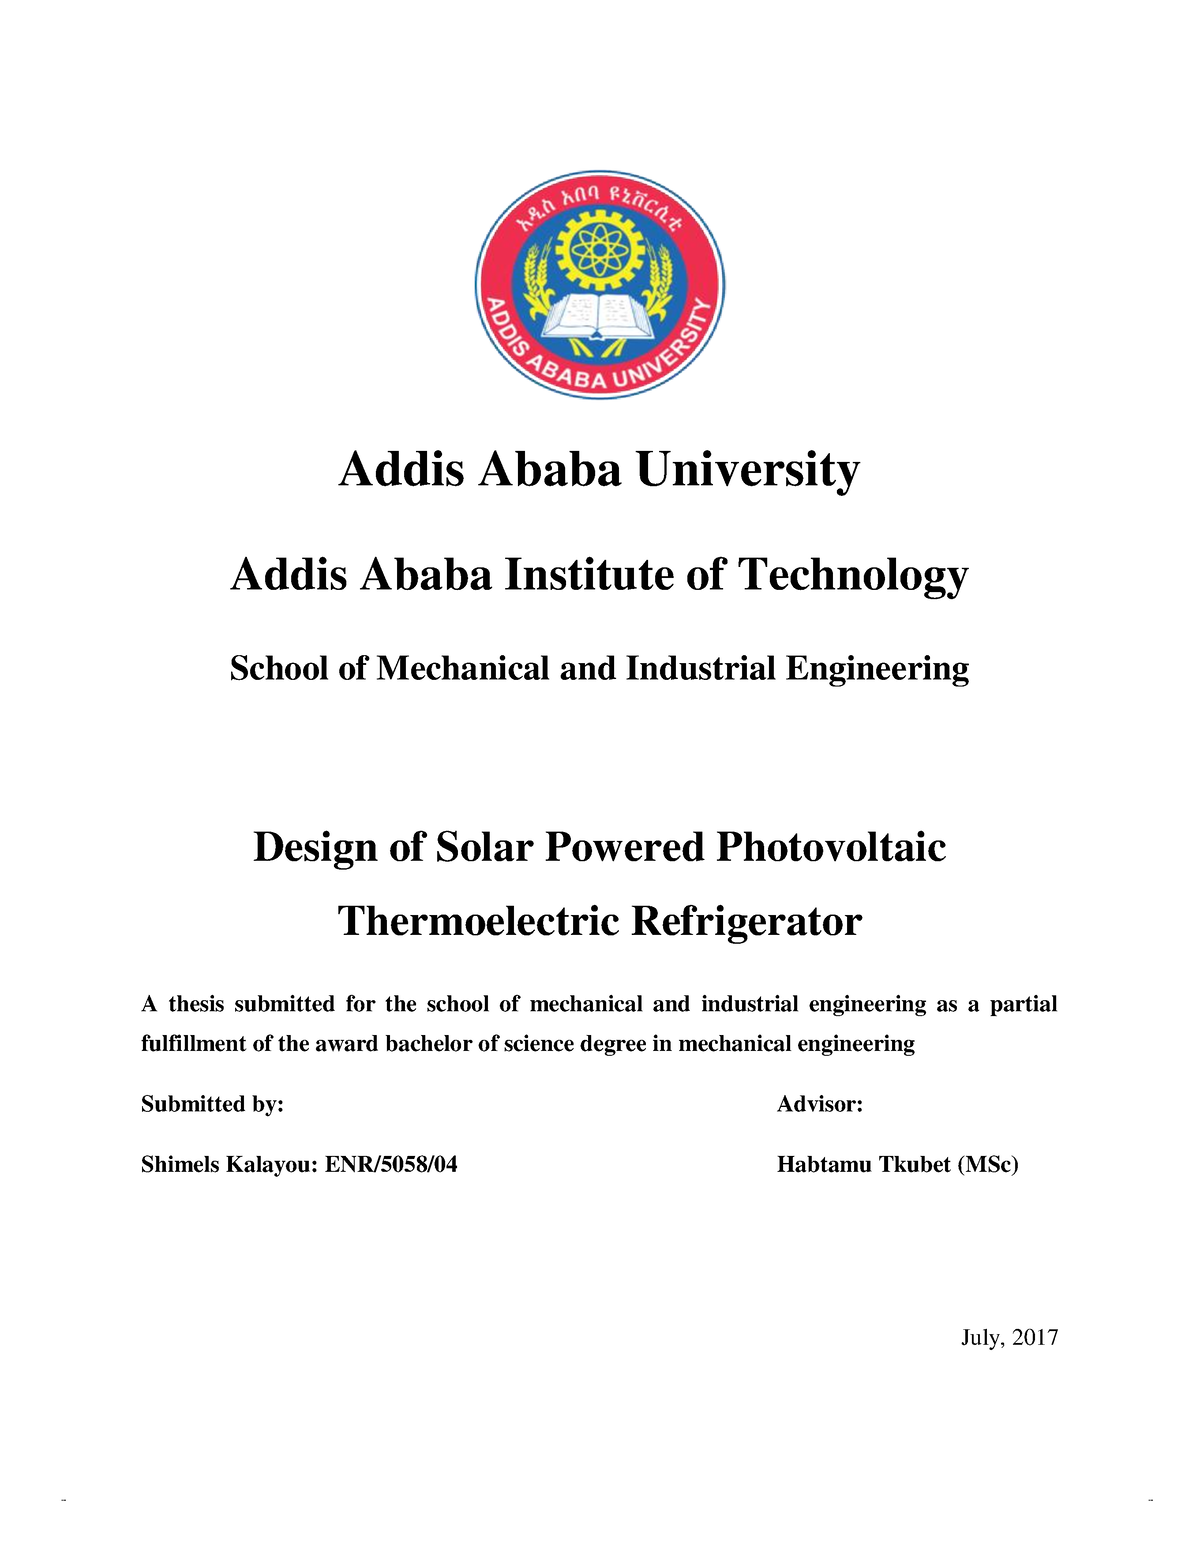 llm thesis addis ababa university